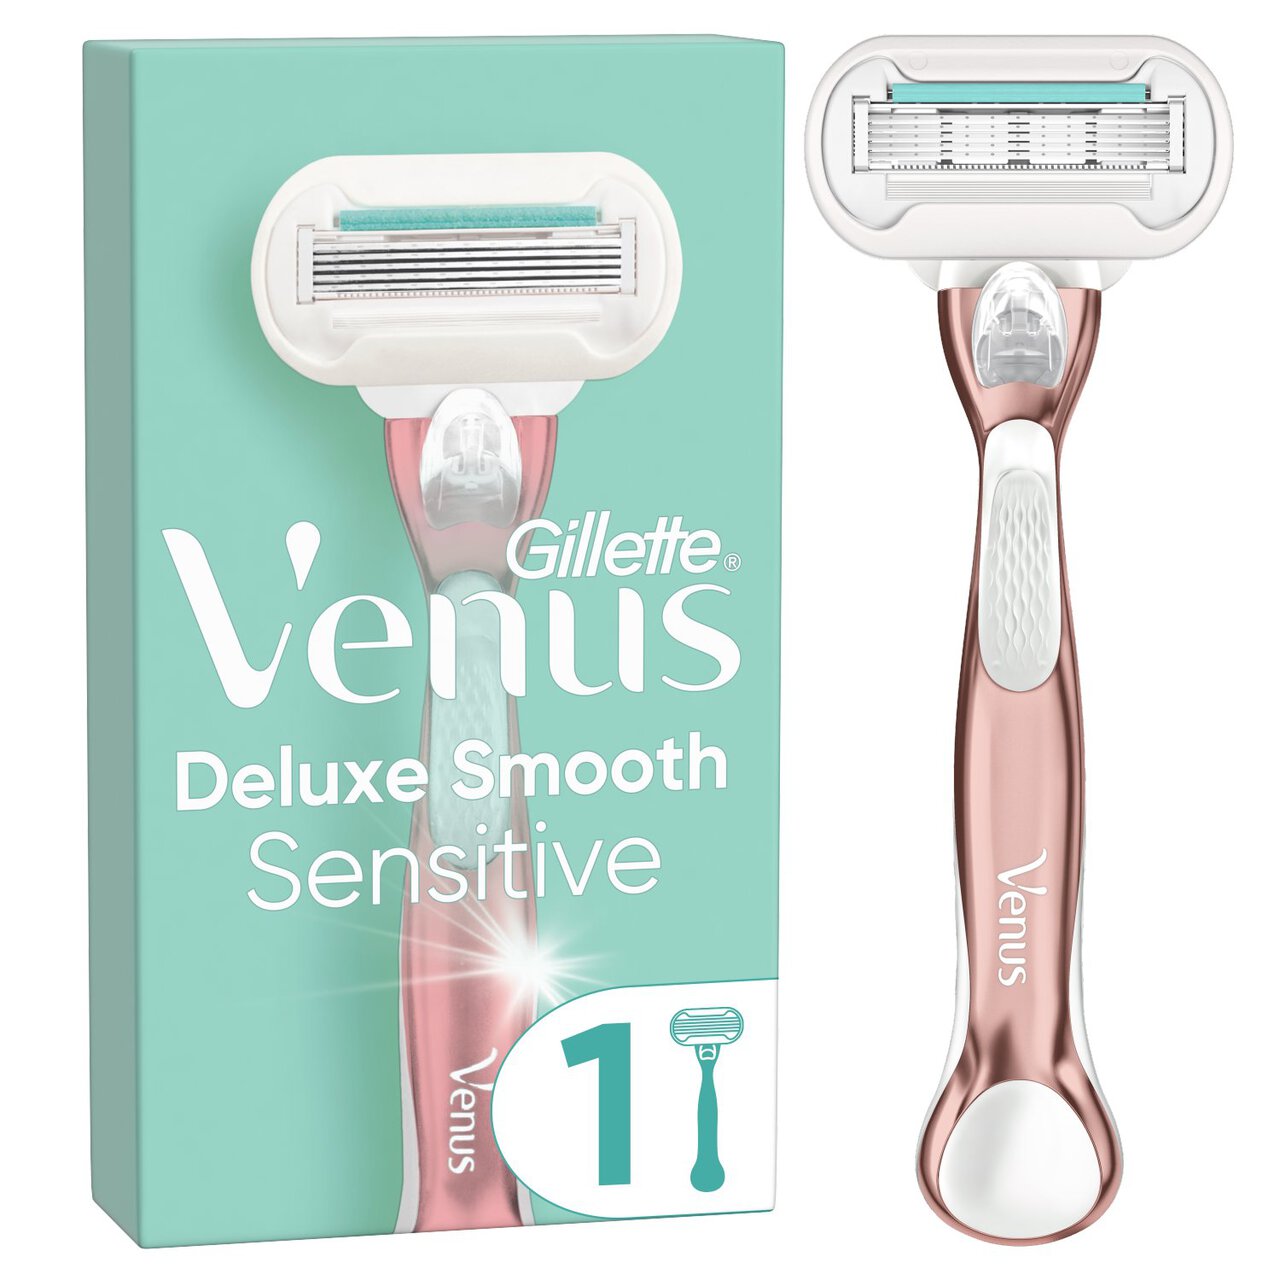 Gillette Venus Deluxe Smooth Sensitive Razor Rose Gold